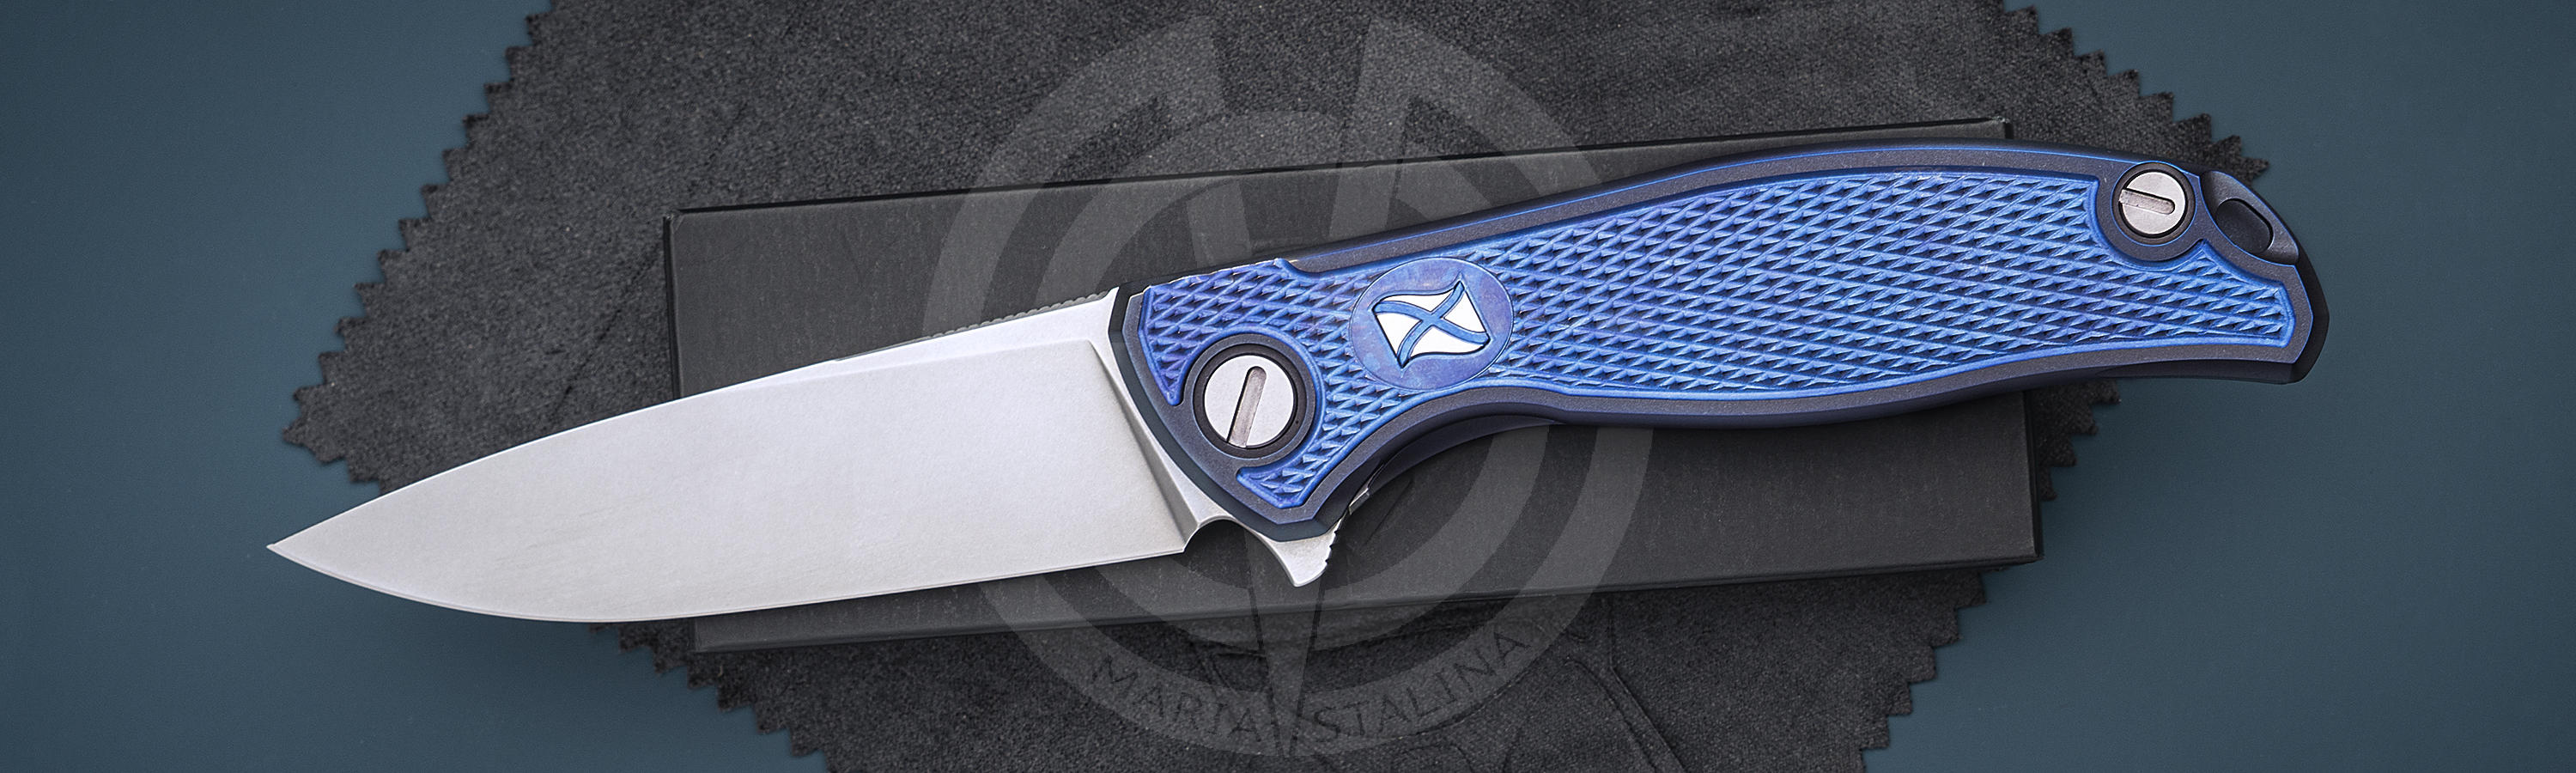 Custom knife SBW Flipper 95